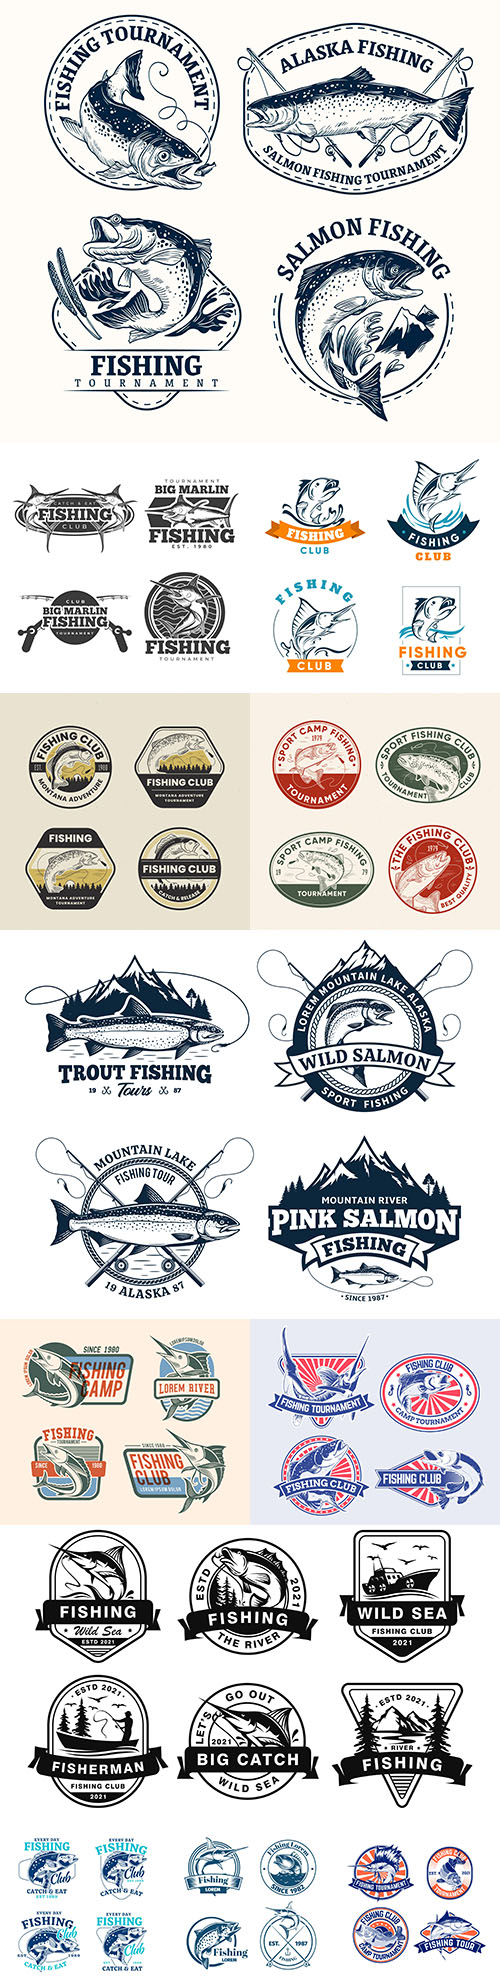 Fishing logos design brand name company corporate
